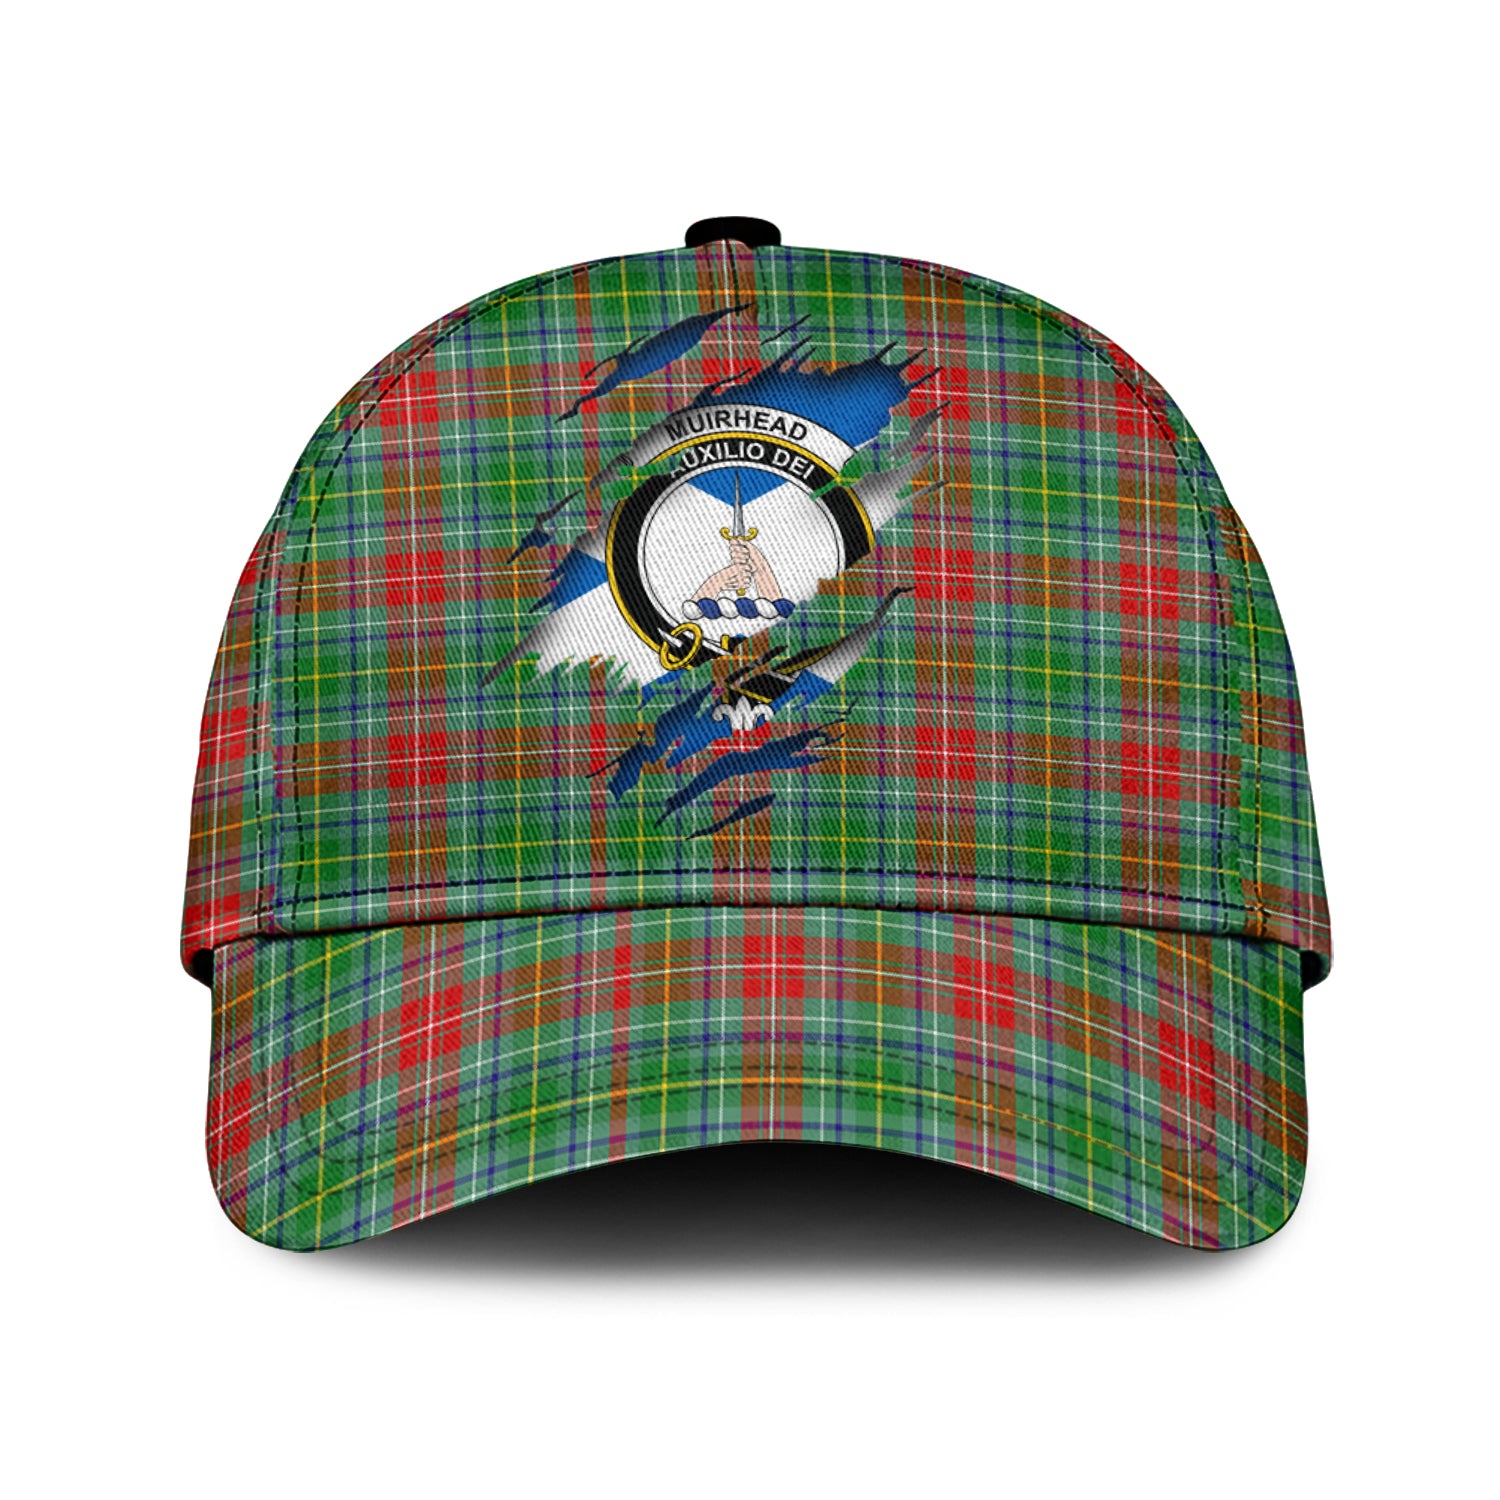 muirhead-tartan-plaid-cap-family-crest-in-me-style-tartan-baseball-cap